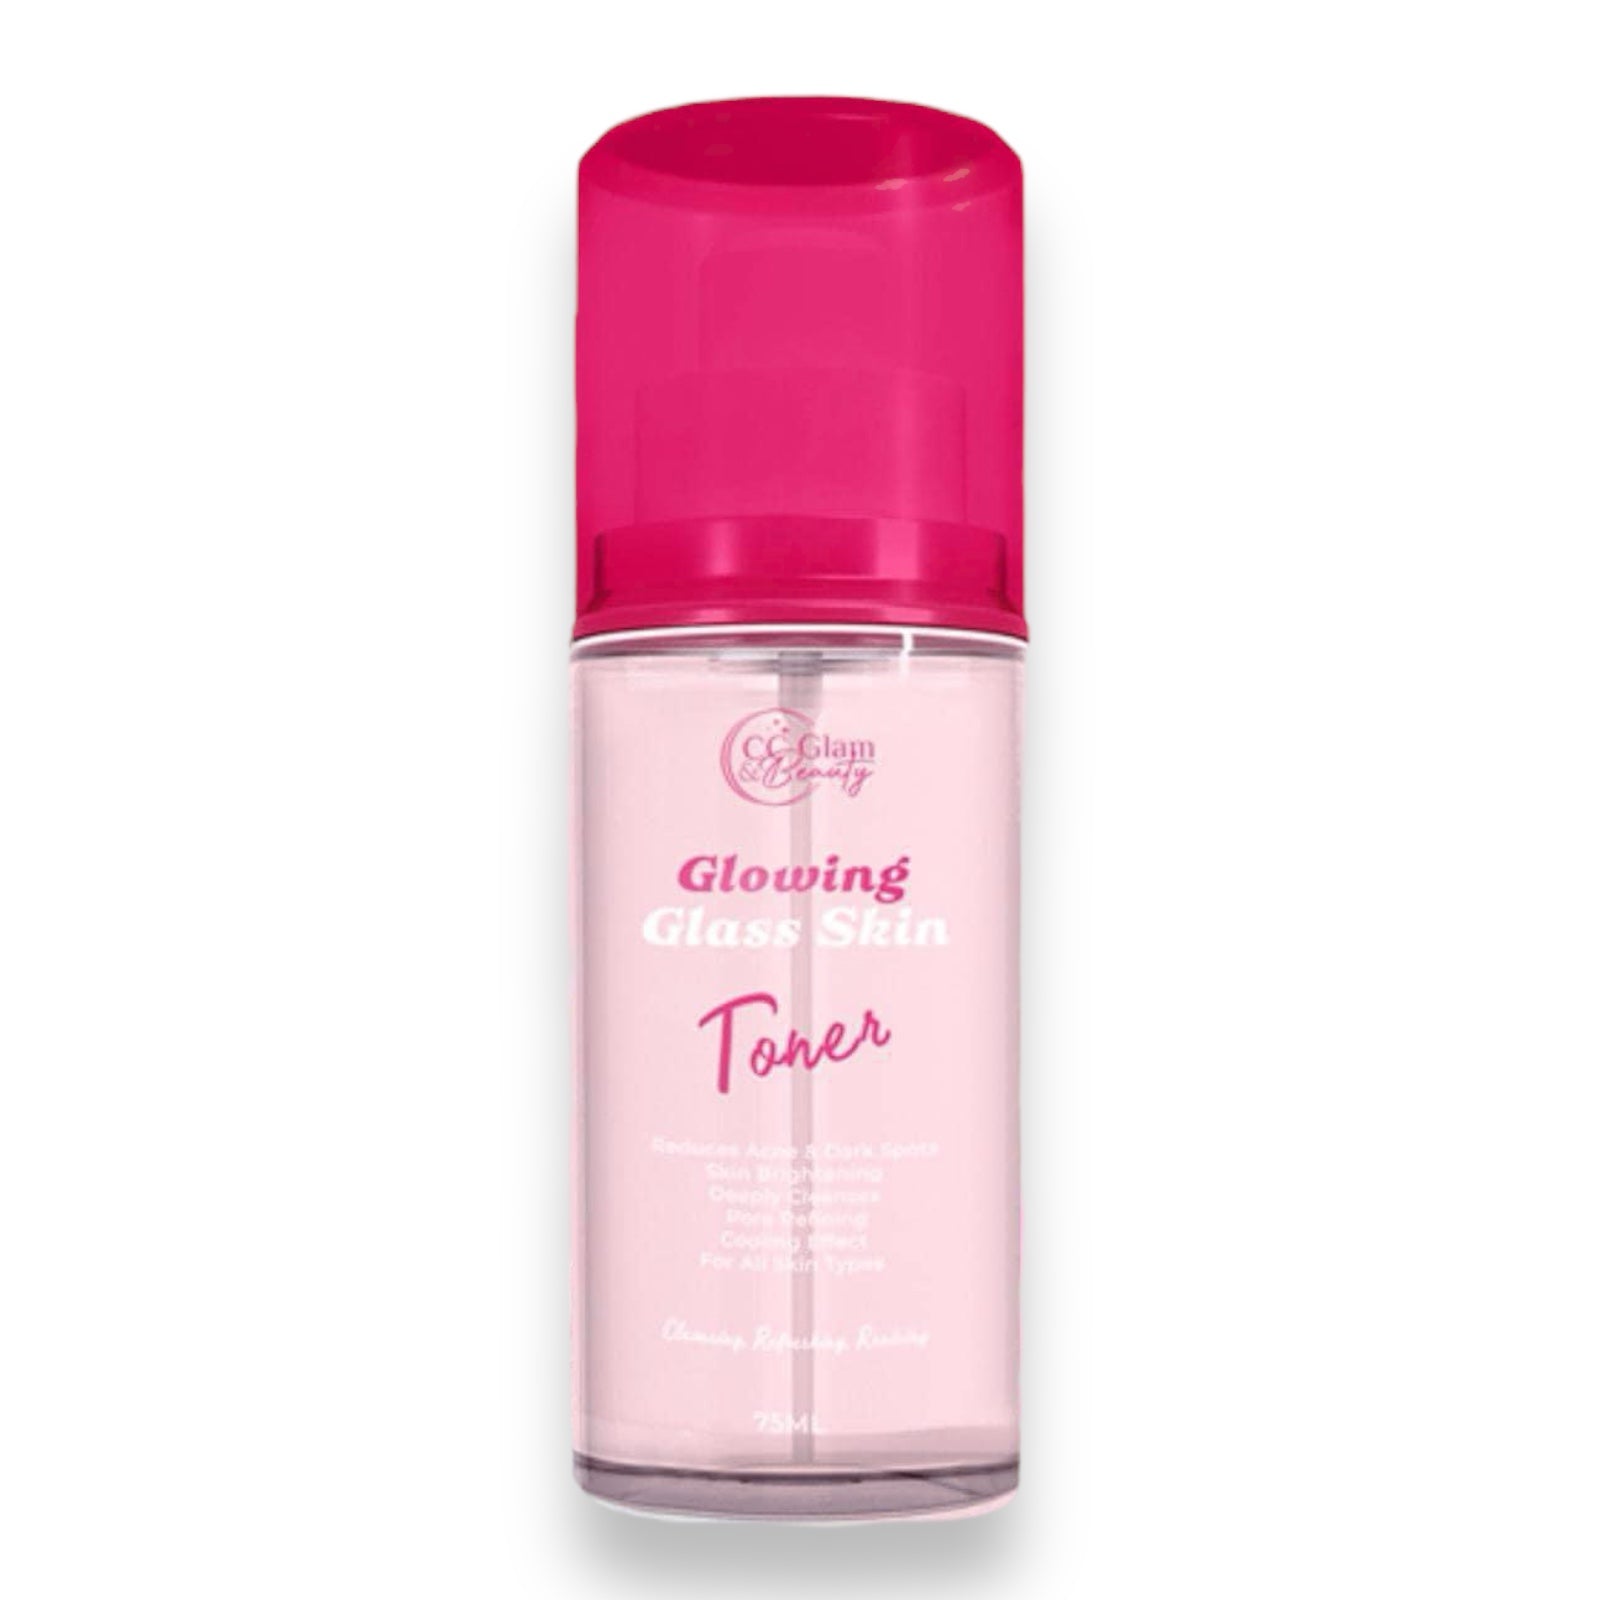 Cris Cosmetics - Glowing Glass Skin Toner 75 ml